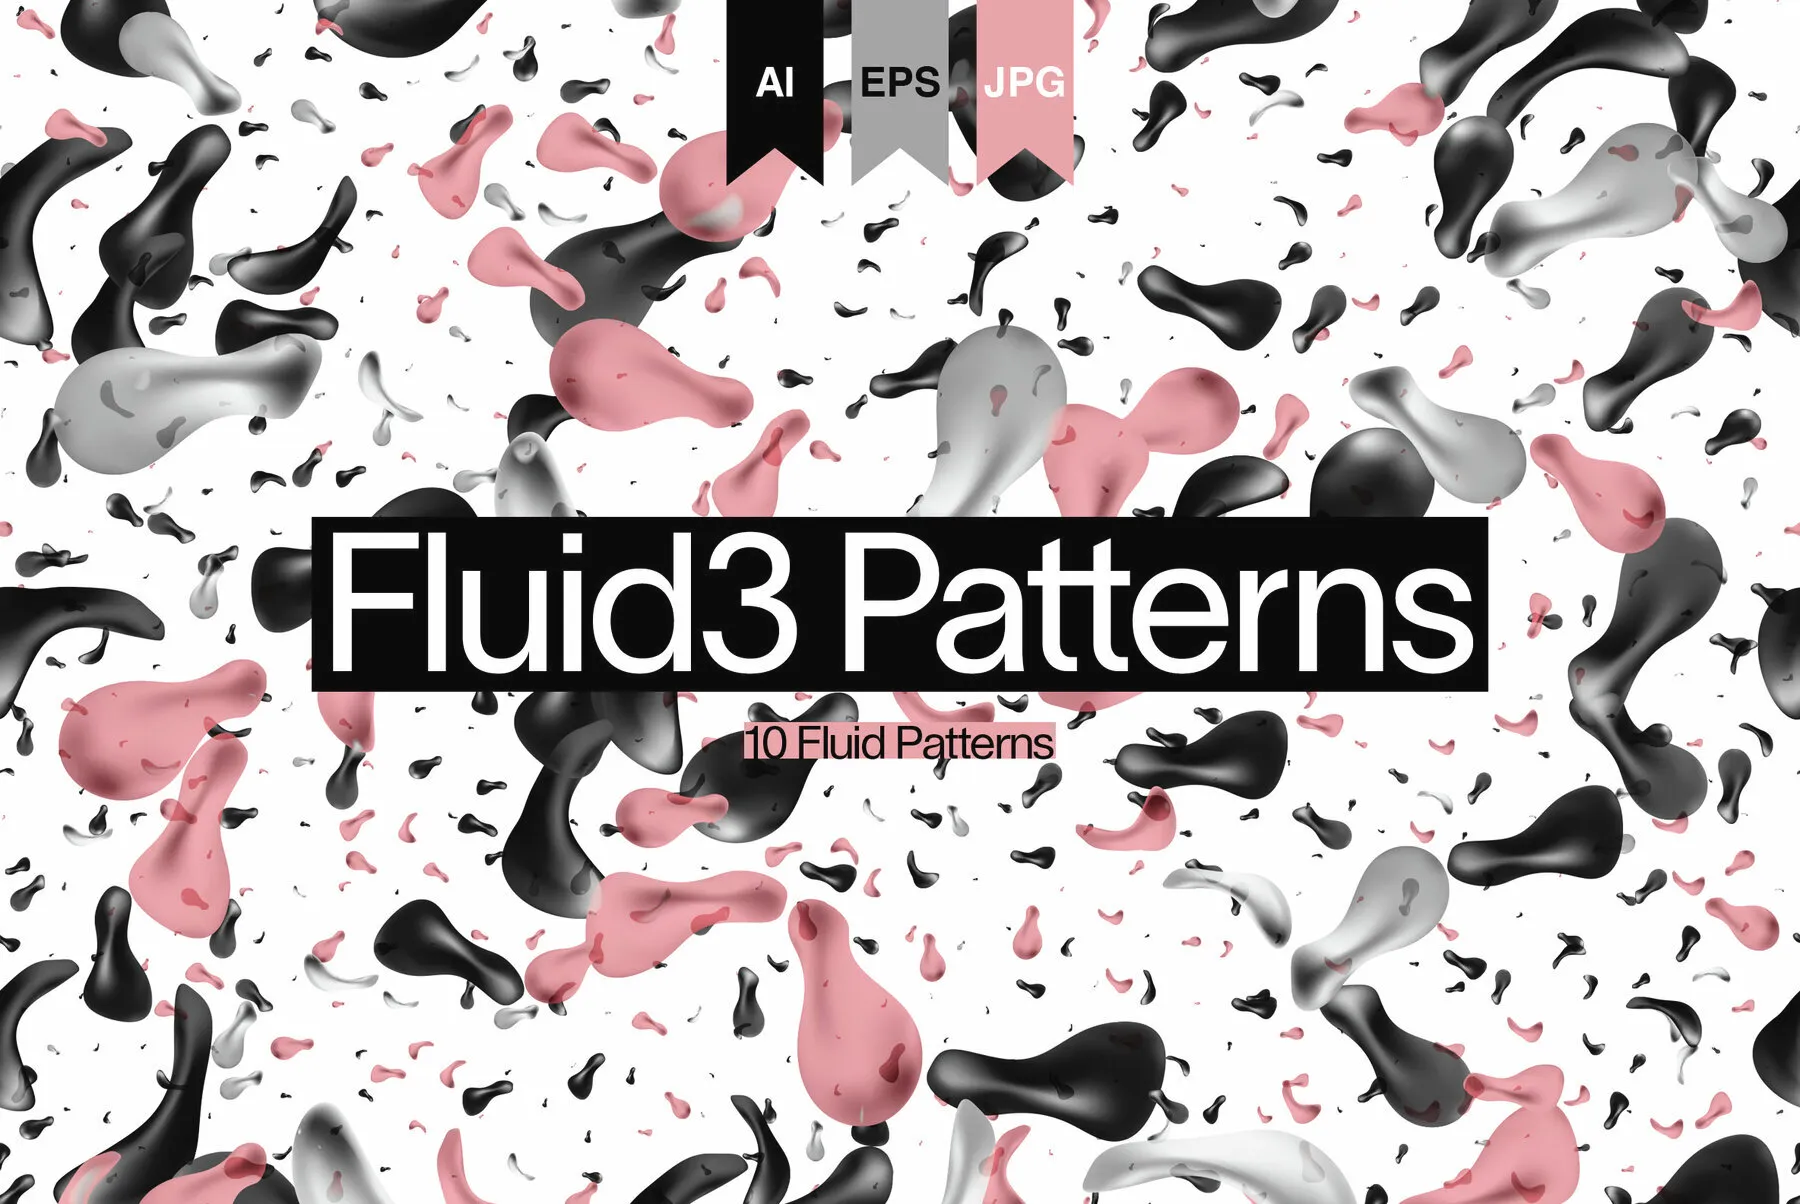 Fluid3 Patterns